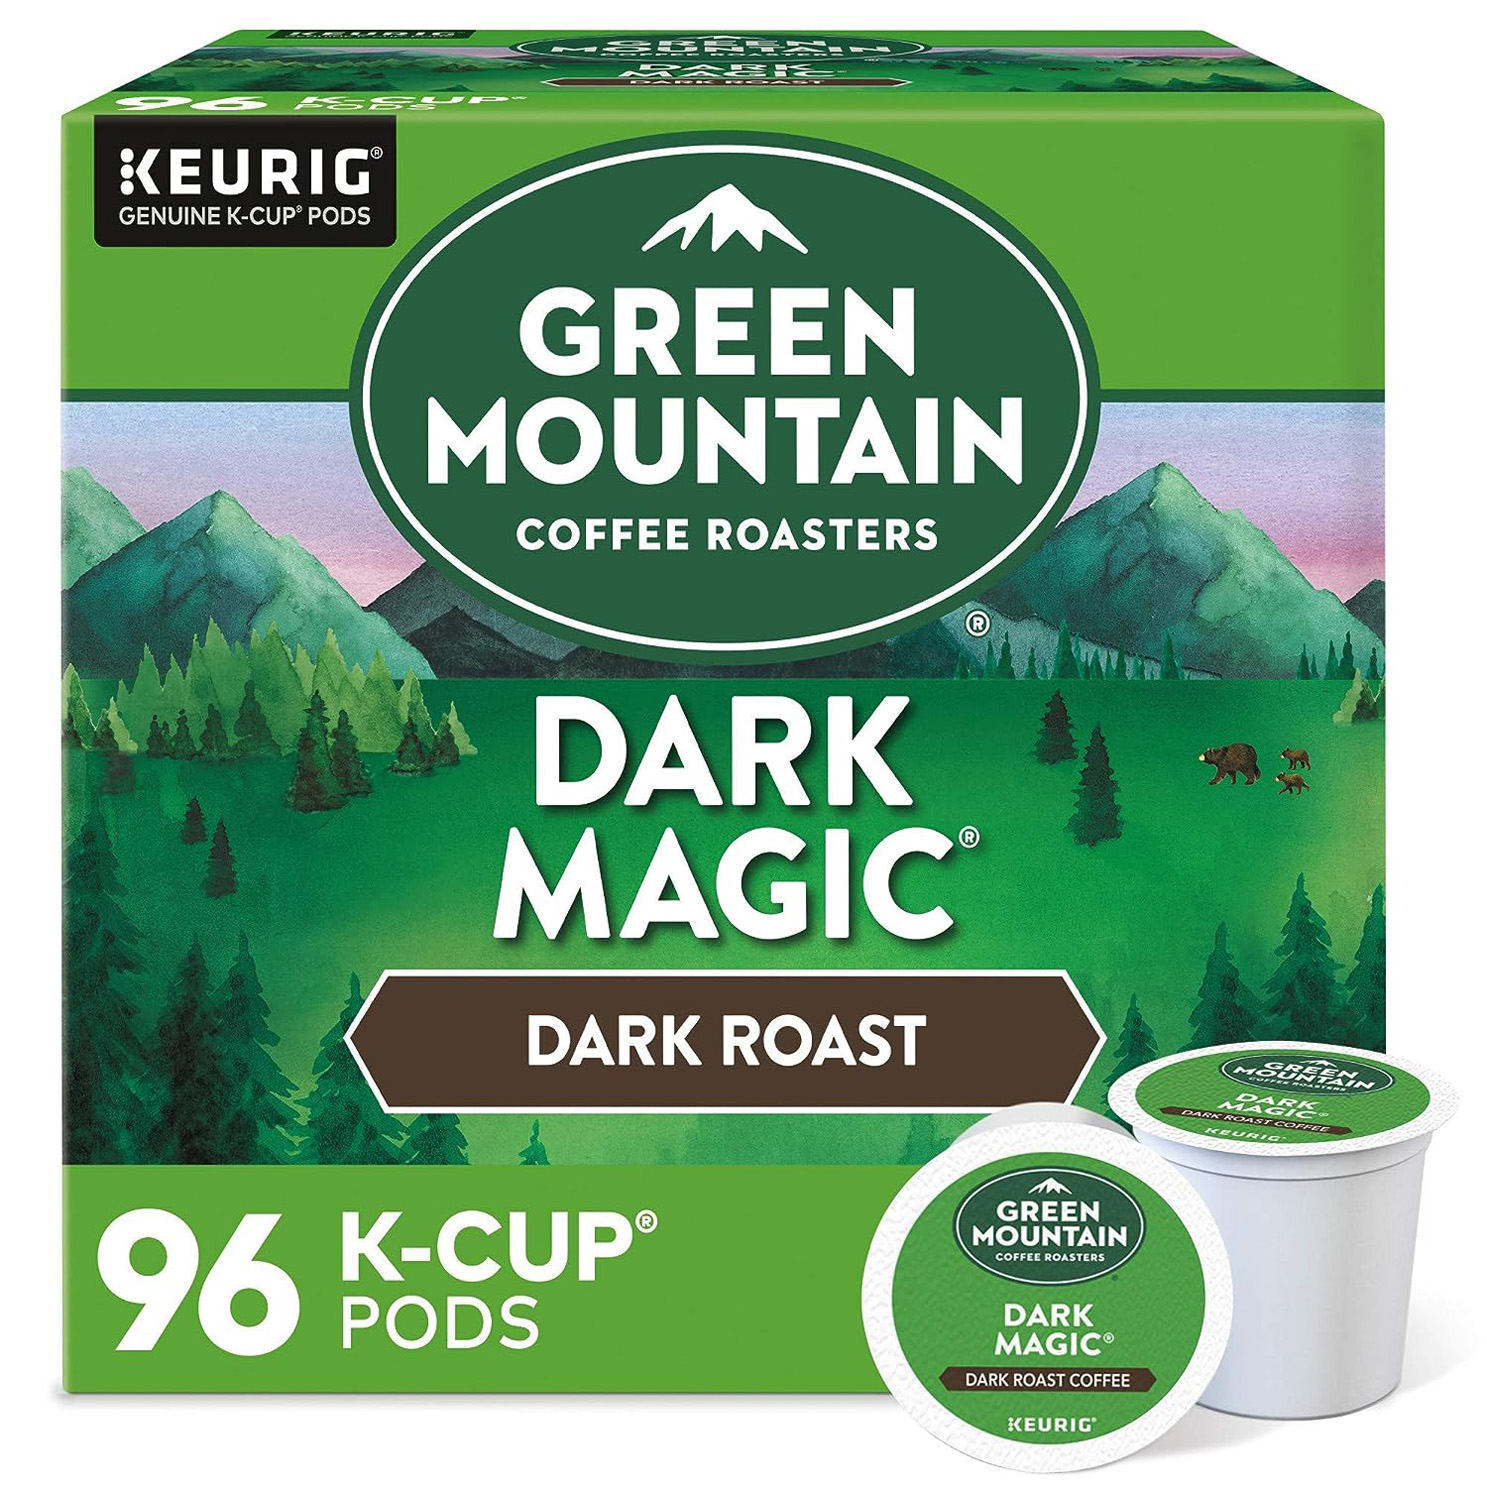 Green Mountain Coffee Roasters Dark Magic Coffee, Keurig Single-Serve K-Cup pods, Dark Roast